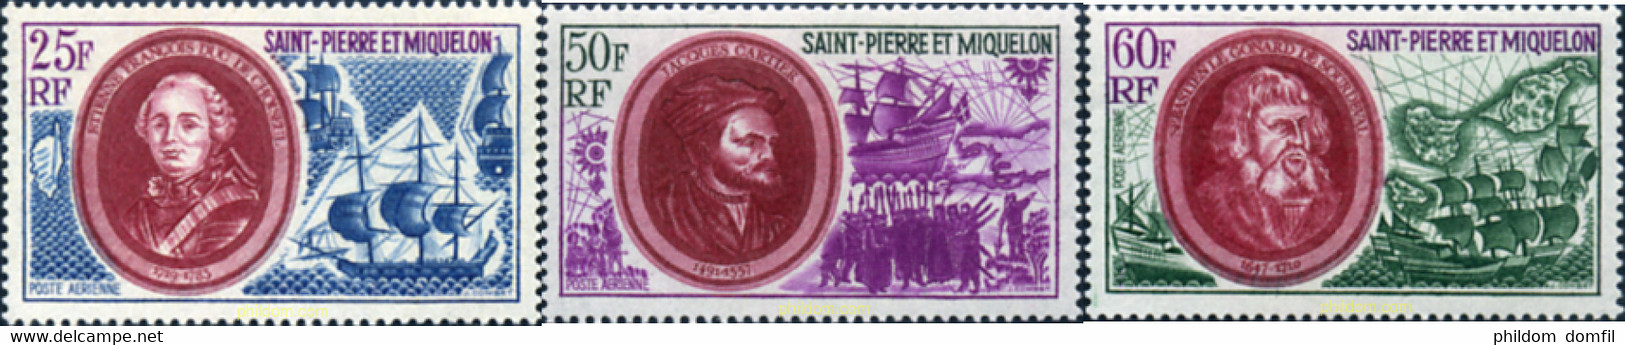 161262 MNH SAN PEDRO Y MIQUELON 1970 CELEBRES PERSONAJES HISTORICOS - Used Stamps